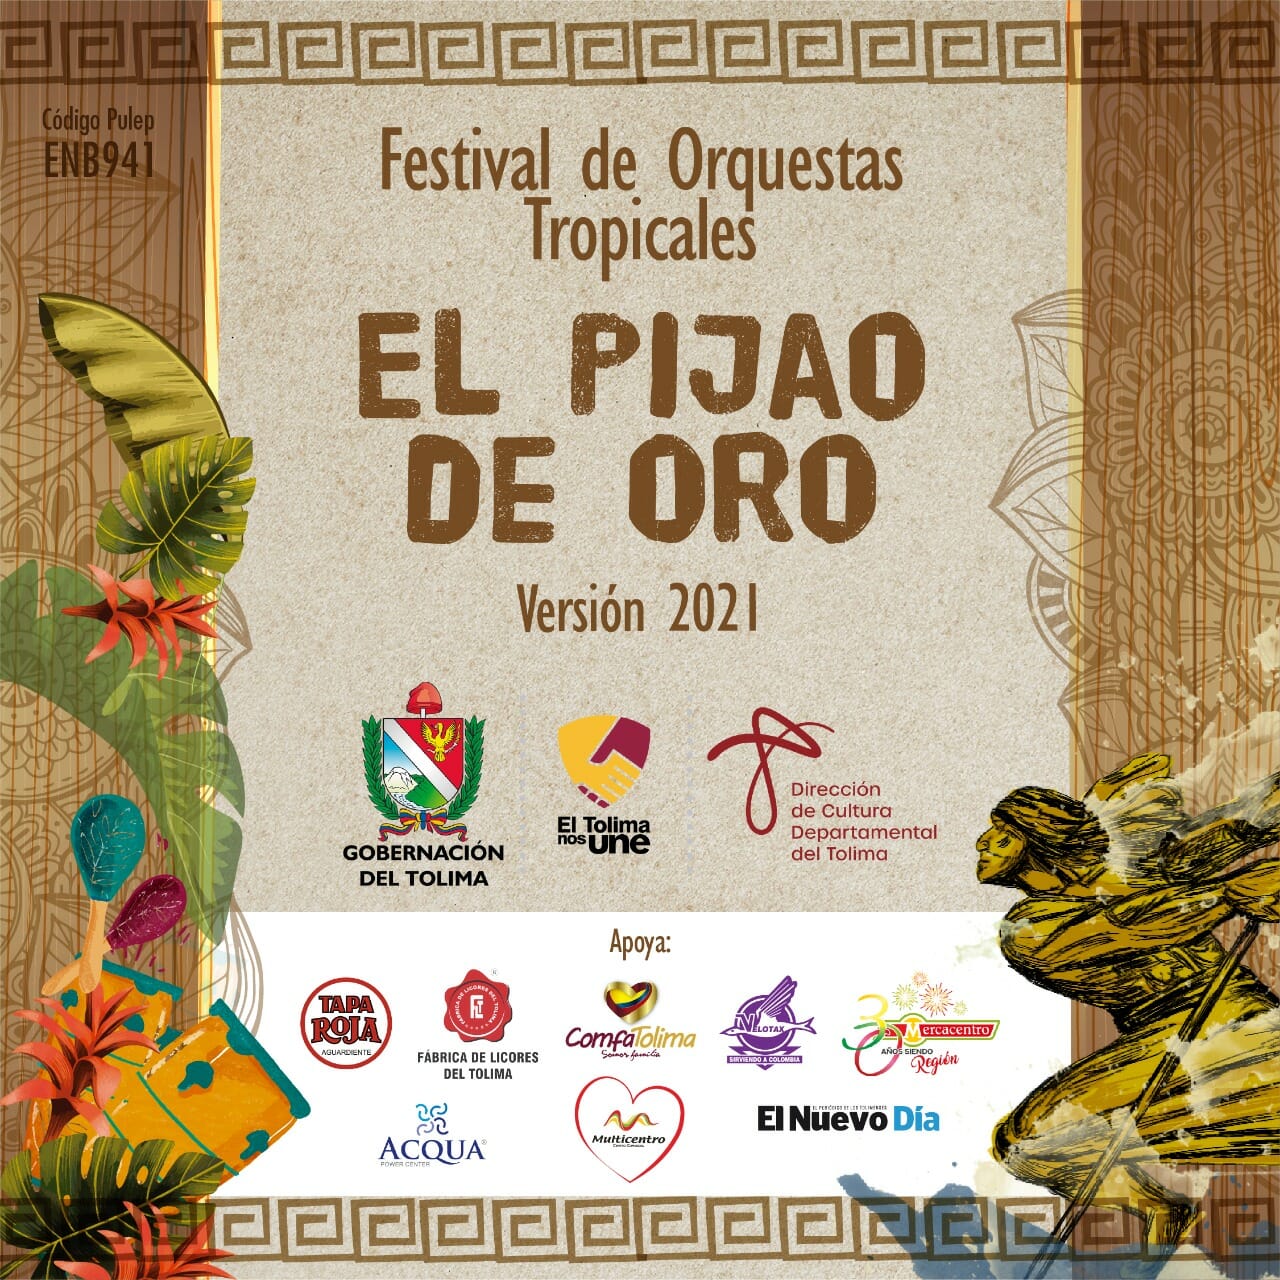 Prográmese este fin de semana para asistir al Festival de Orquestas Pijao de Oro. 1